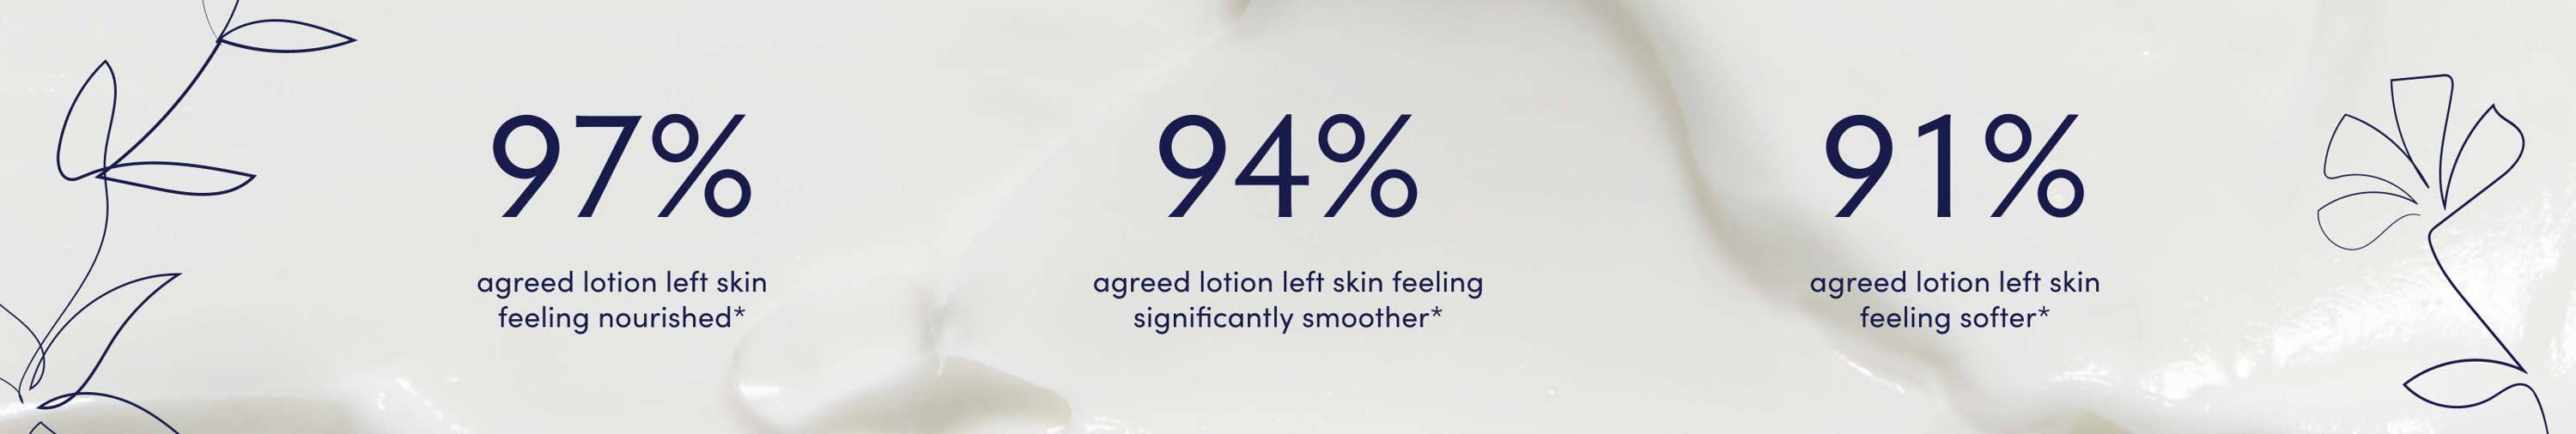 97% agreed lotion left skin feeling nourished